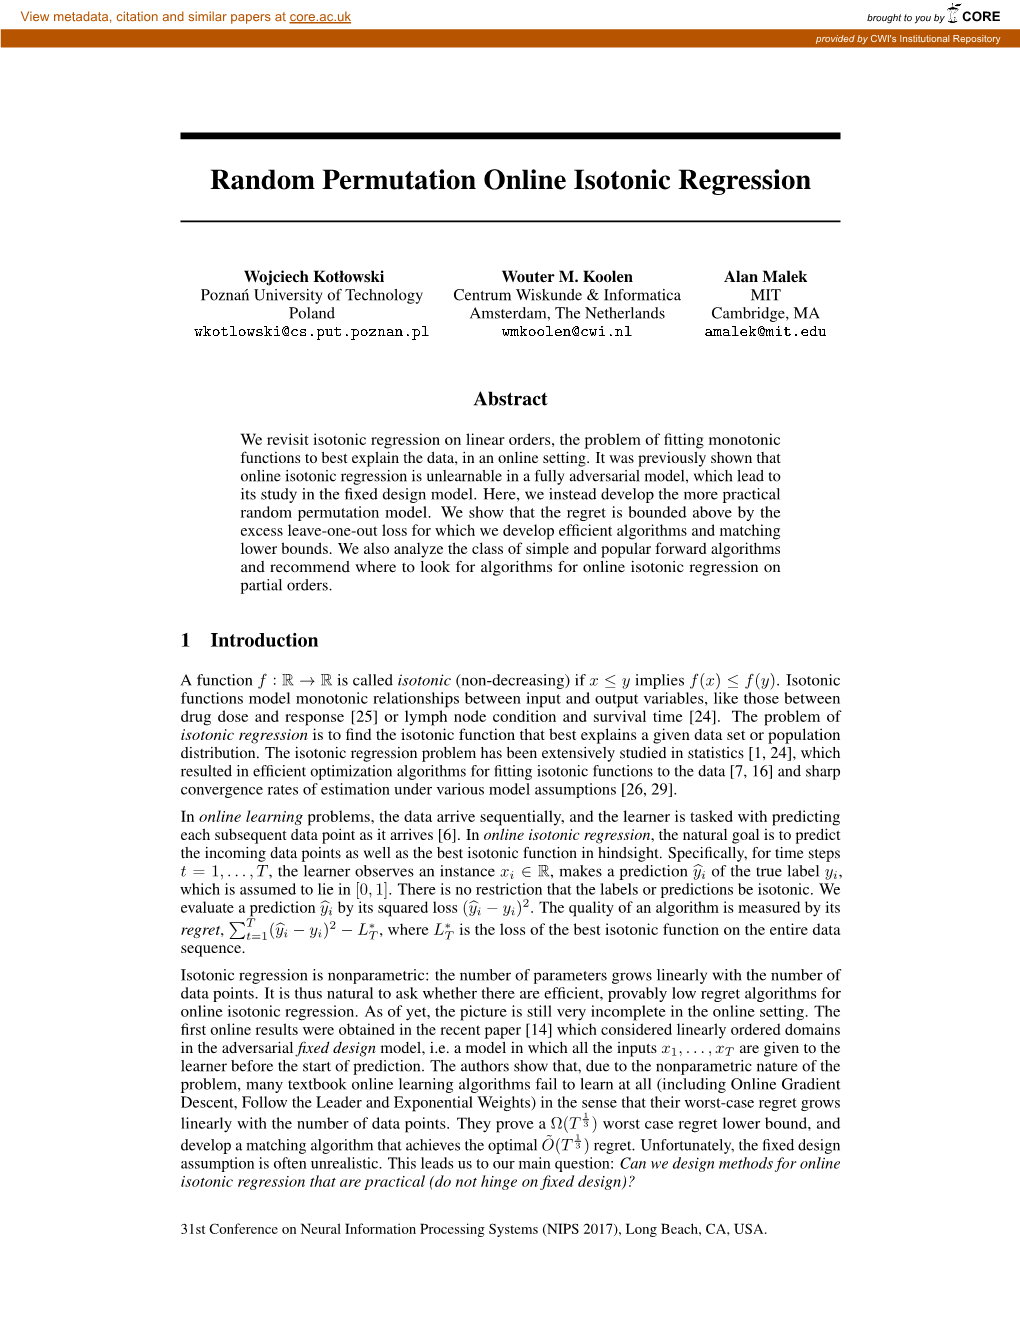 Random Permutation Online Isotonic Regression